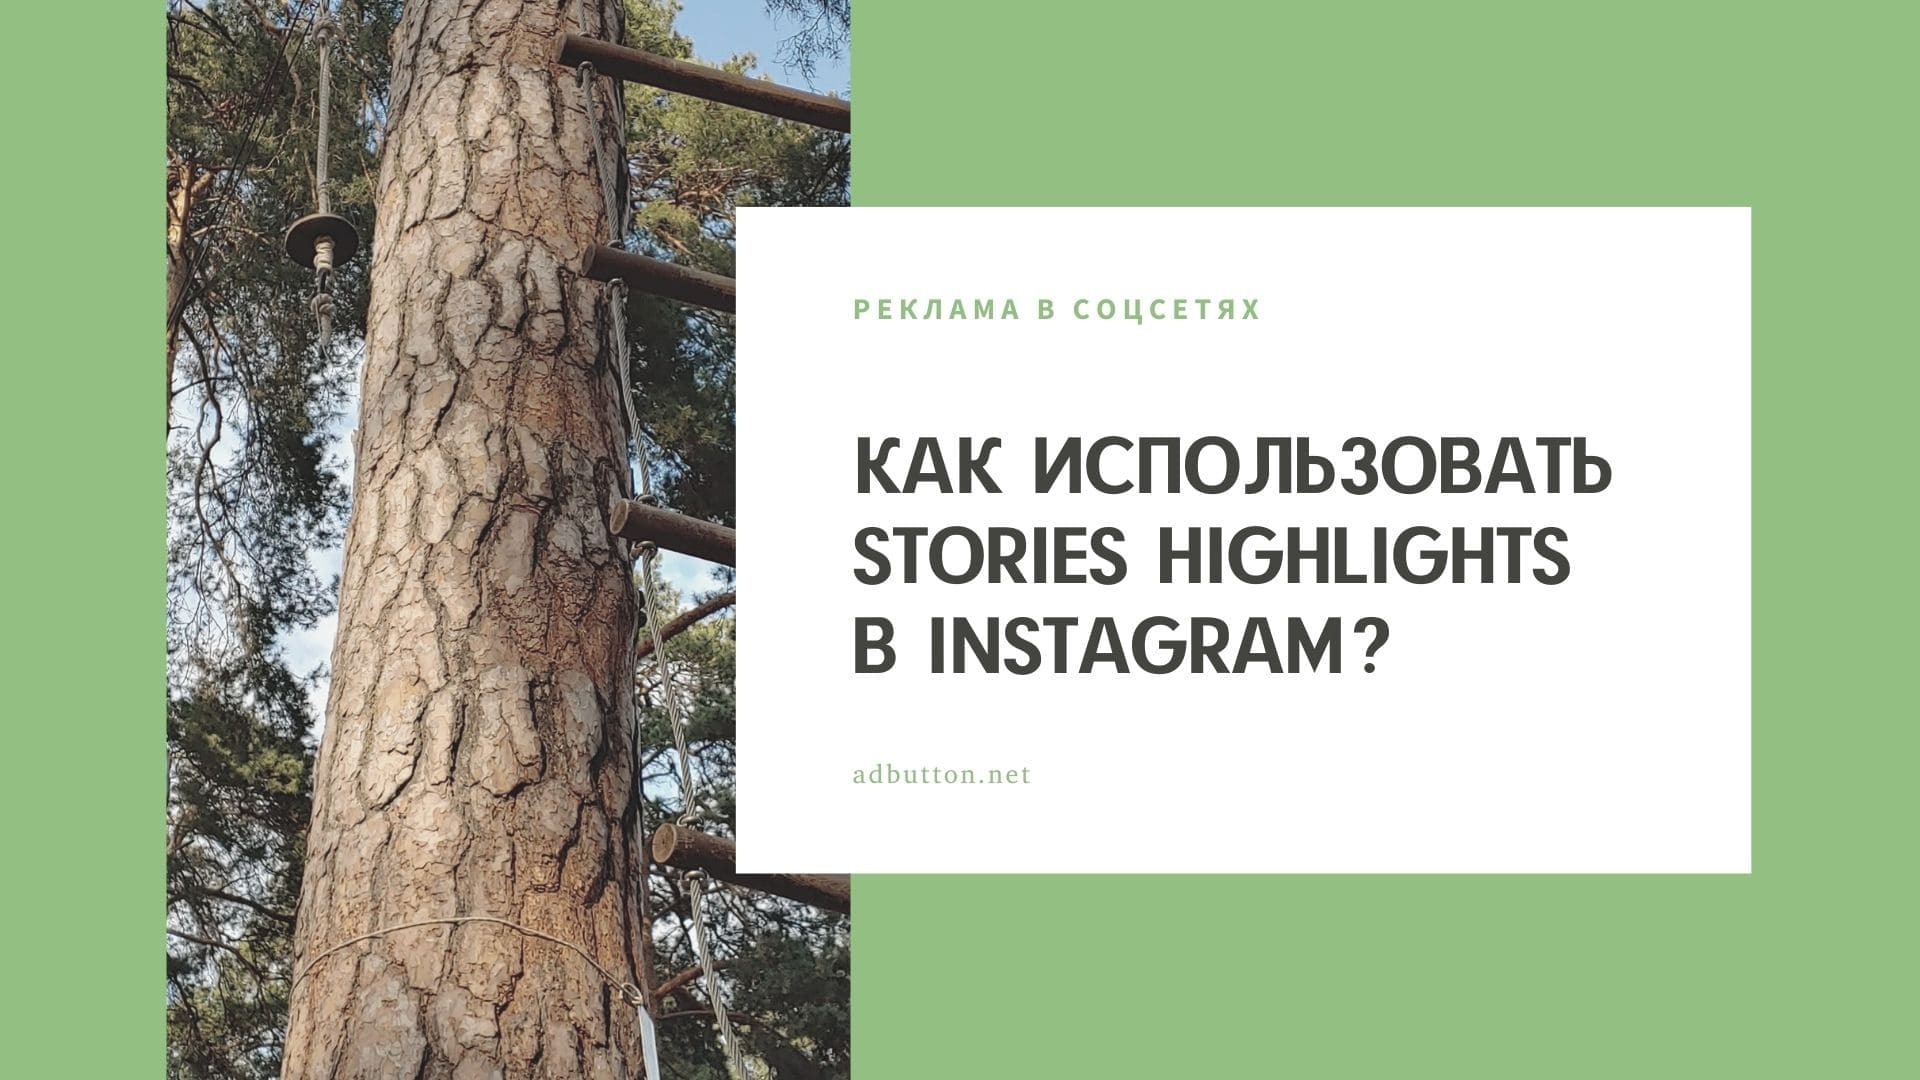 Stories Highlights в Instagram и продвижение онлайн бизнеса